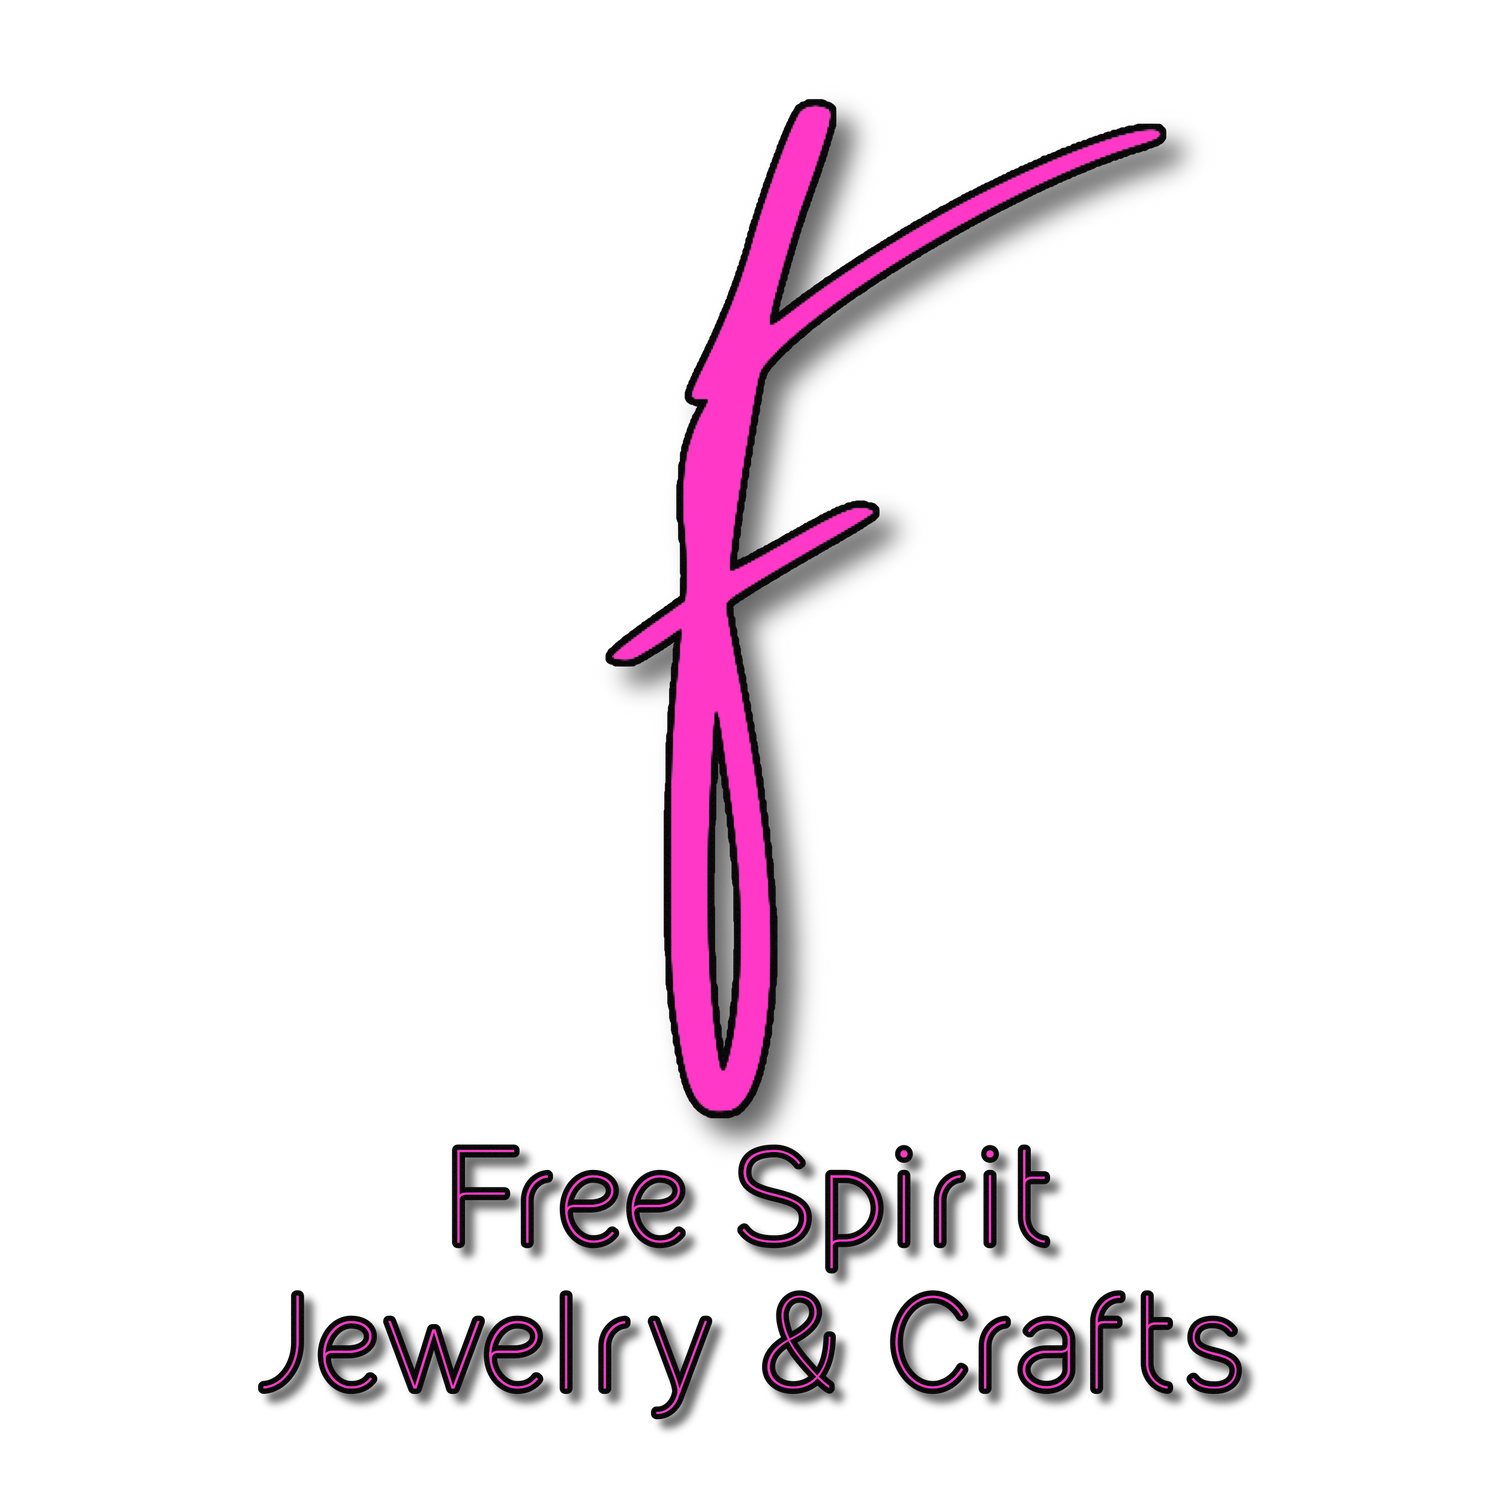 By "Free Spirit Jewelry & Crafts"